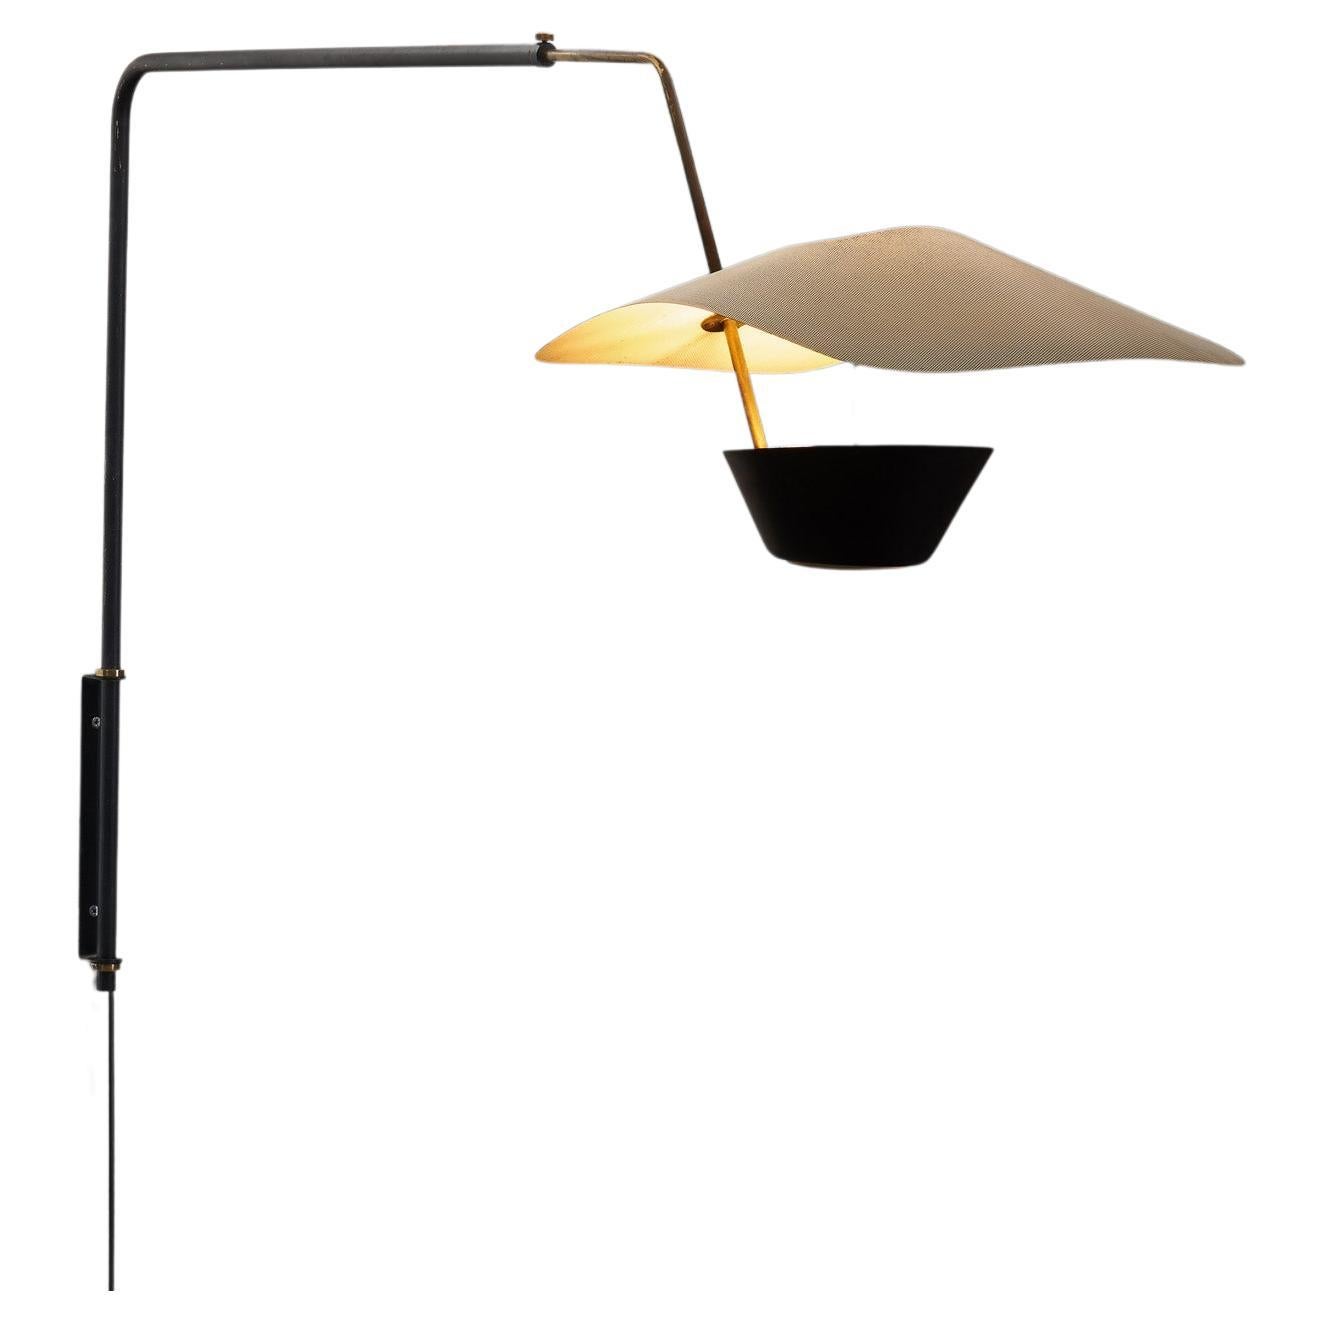 Pierre Guariche Cerf Volant Floor Lamp